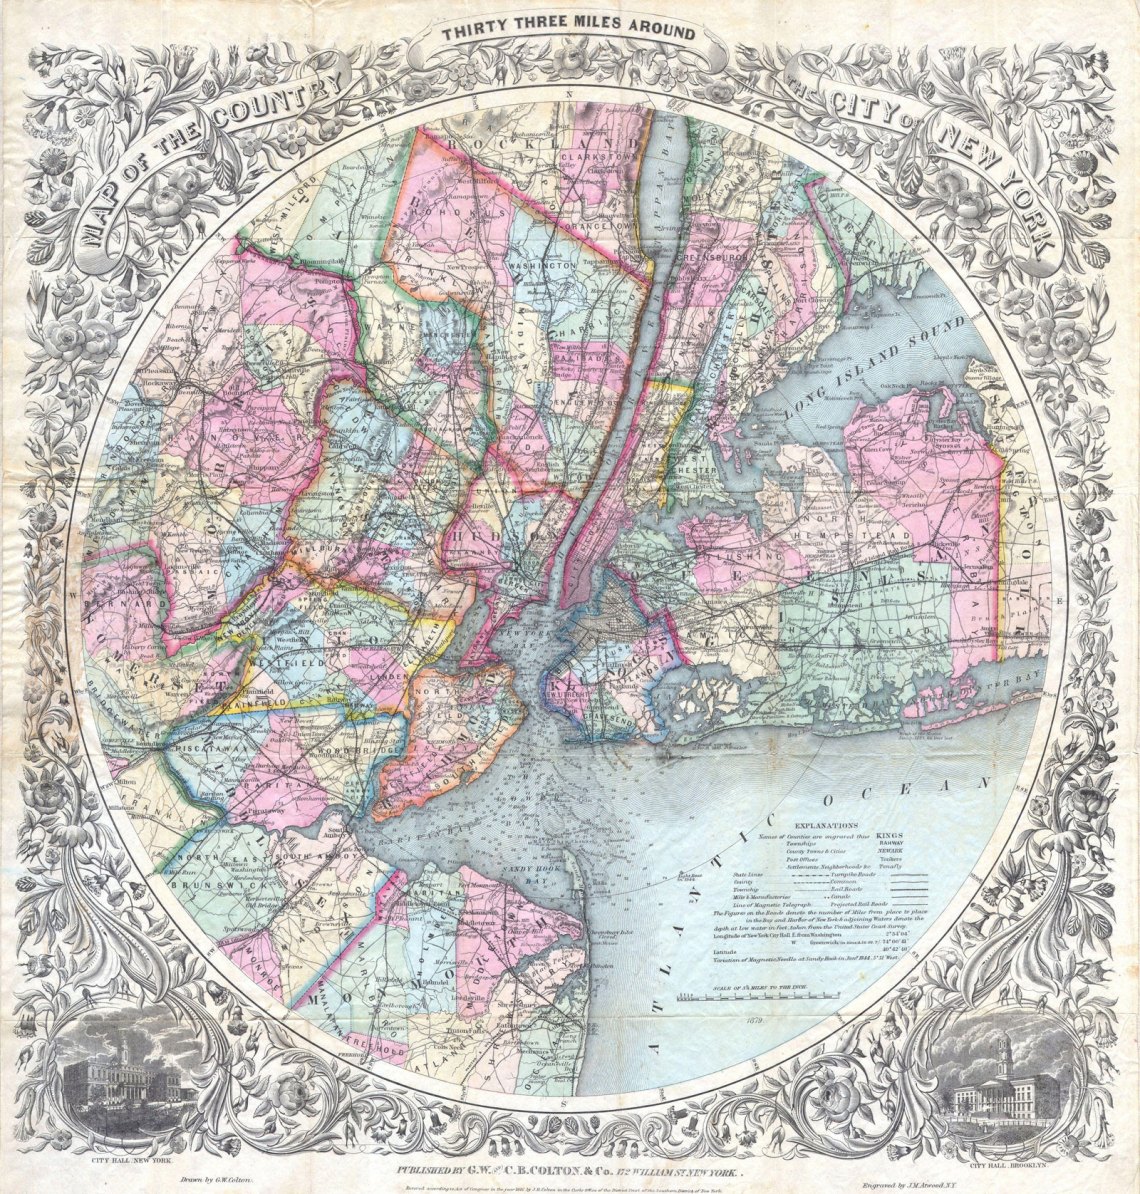 a nineteenth century map of New York City